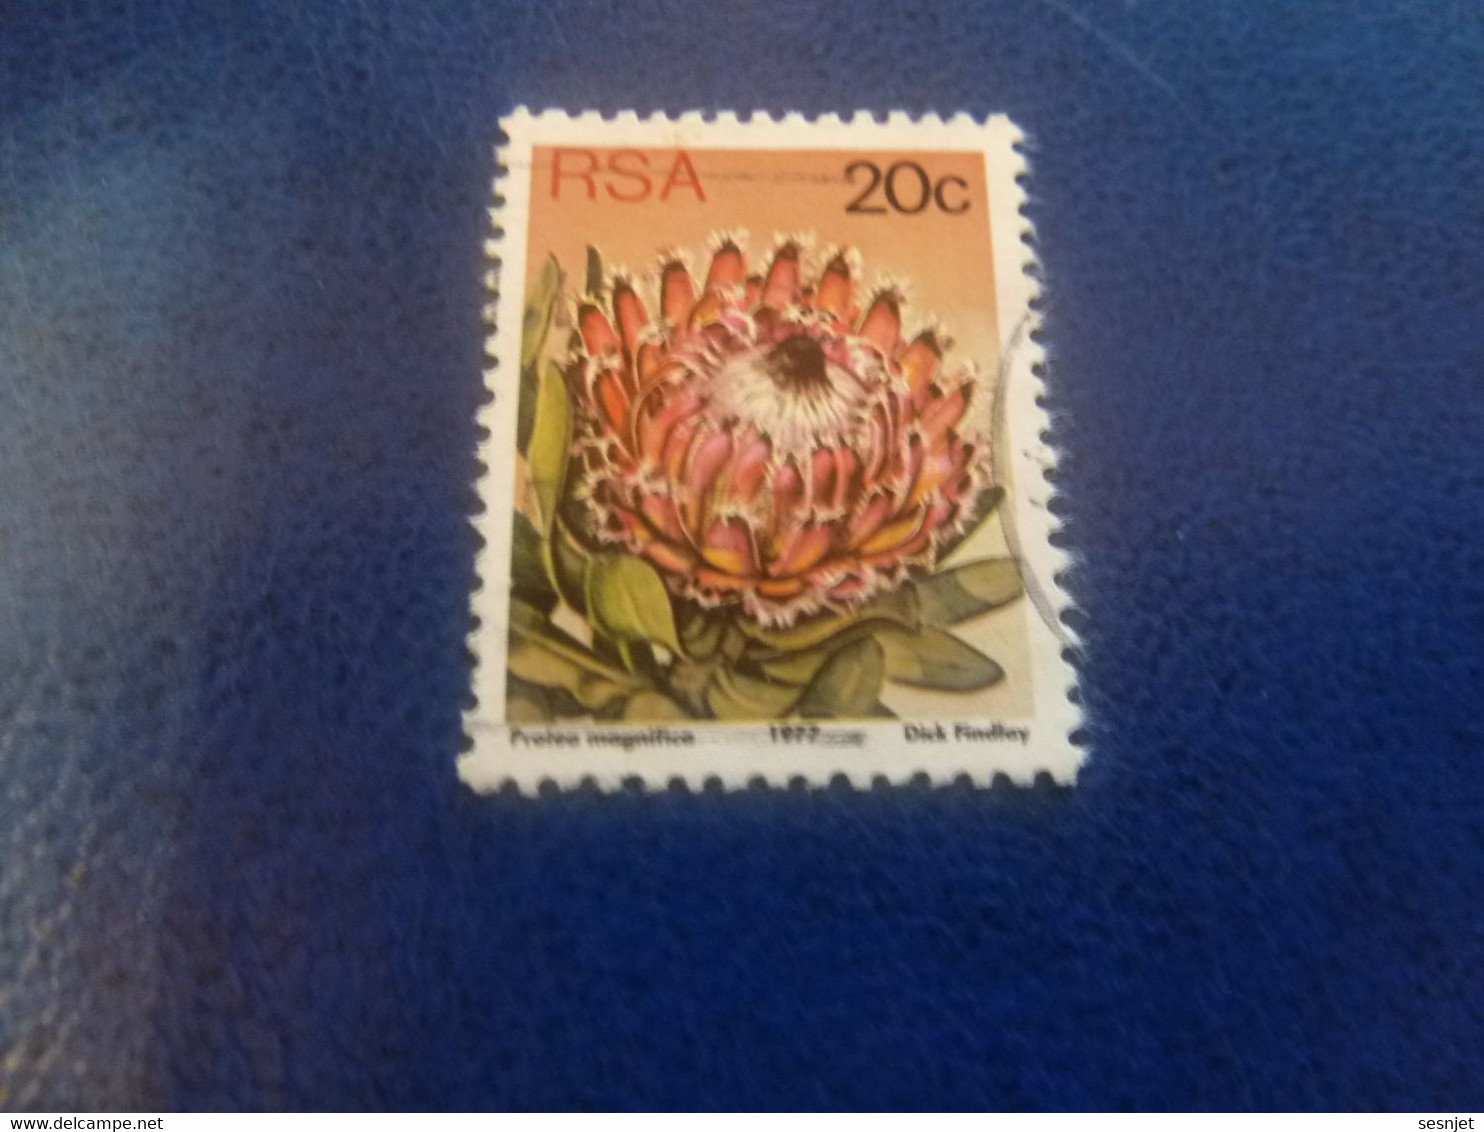 Rsa - Protea Punctata - Dick Findlay - 20 C. - Multicolore - Oblitéré - Année 1977 - - Used Stamps